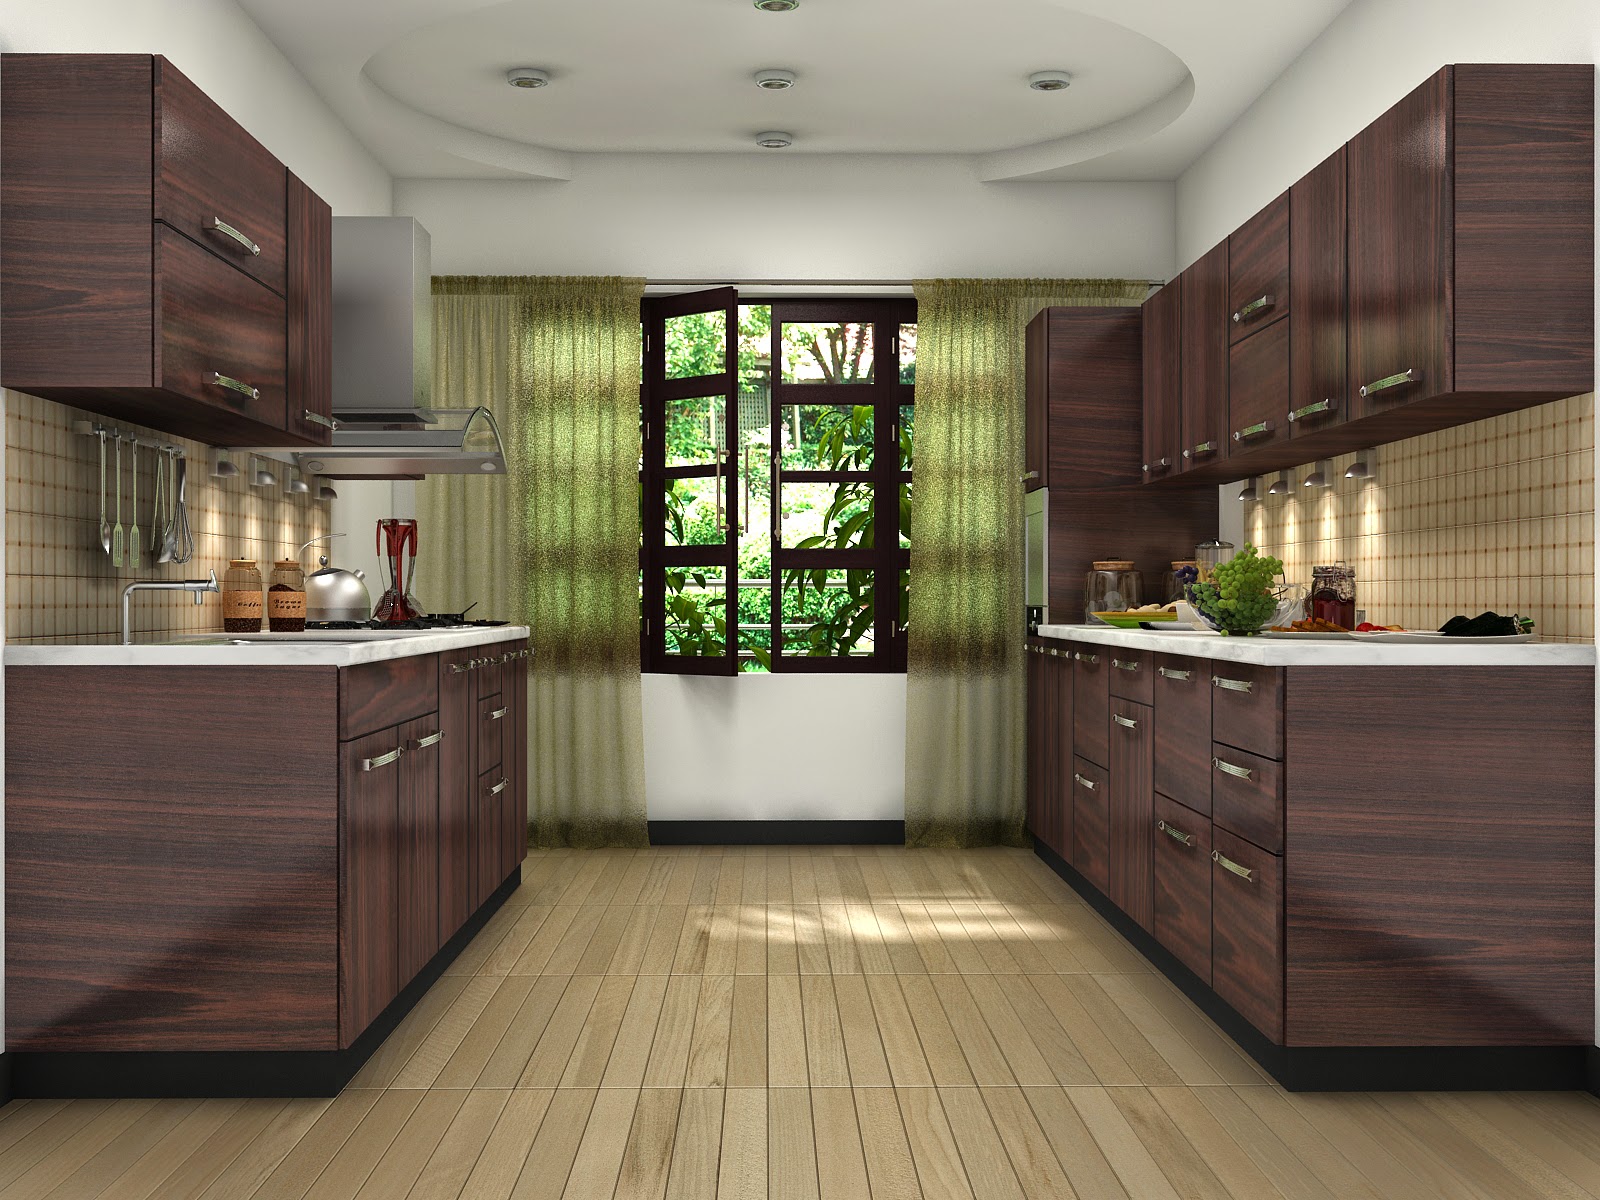 Modular Kitchen inspiration | Interior Decor Blog ...